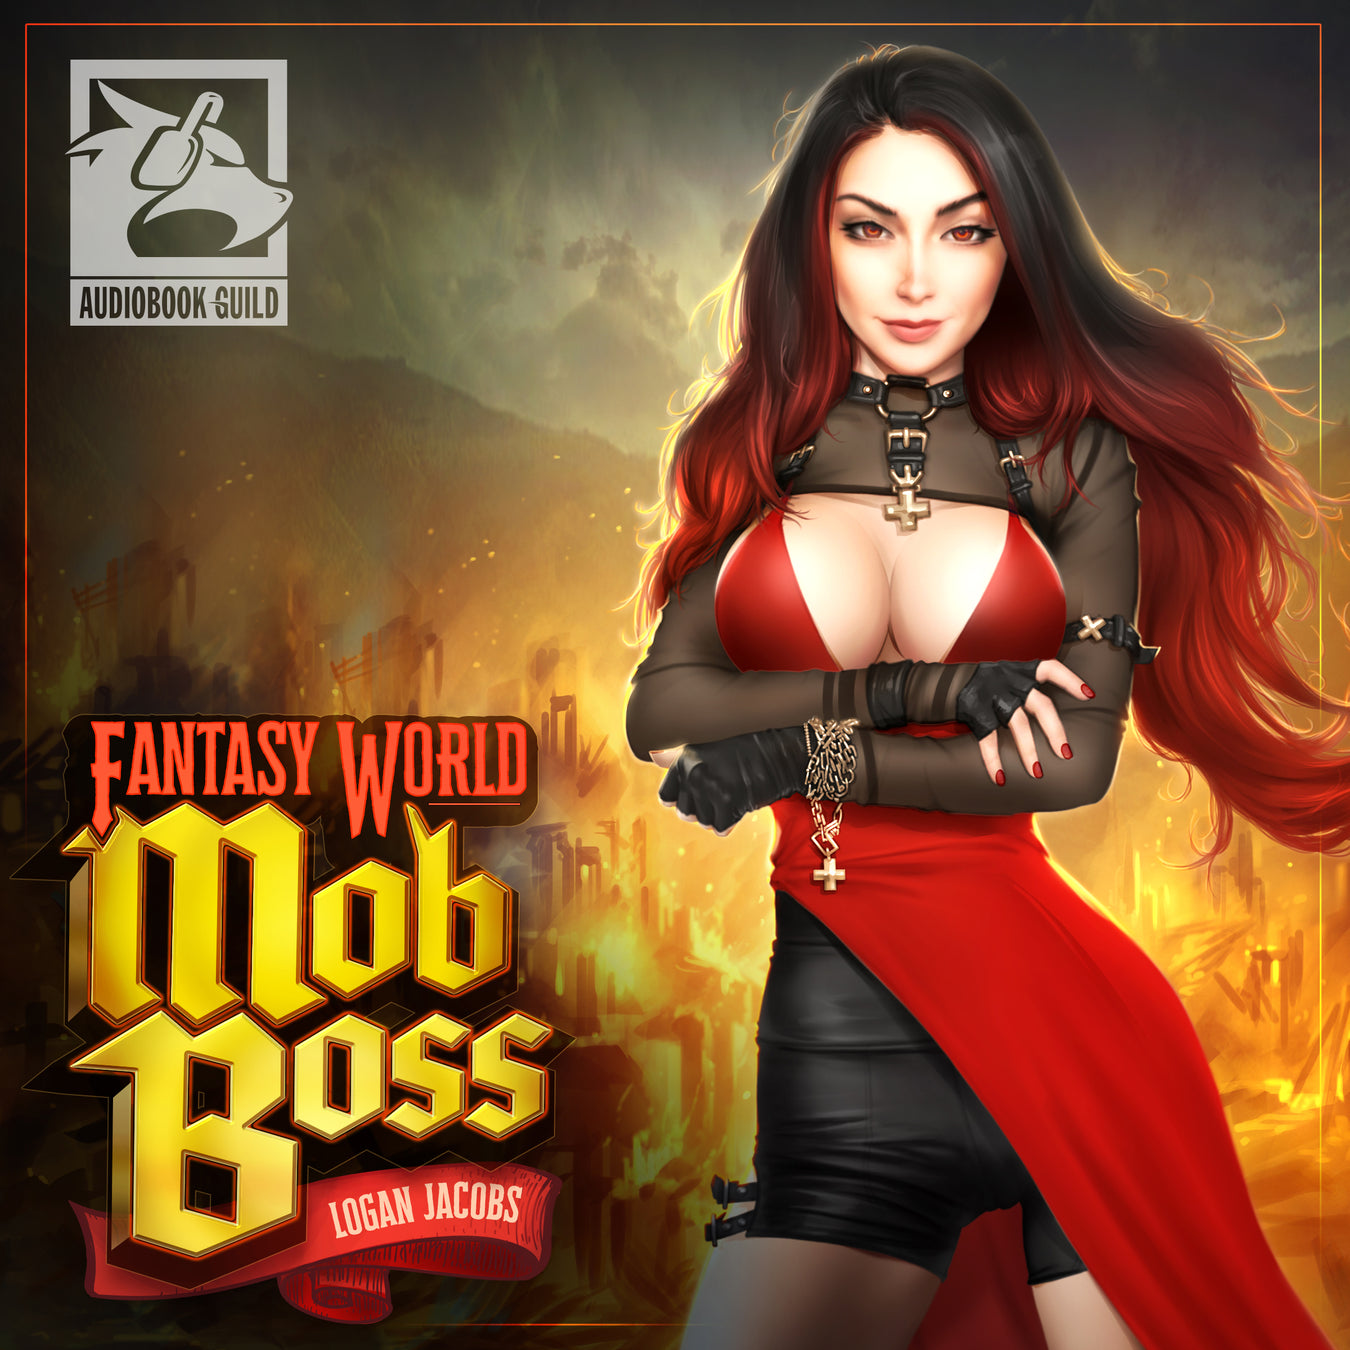 Fantasy World Mob Boss by Logan Jacobs